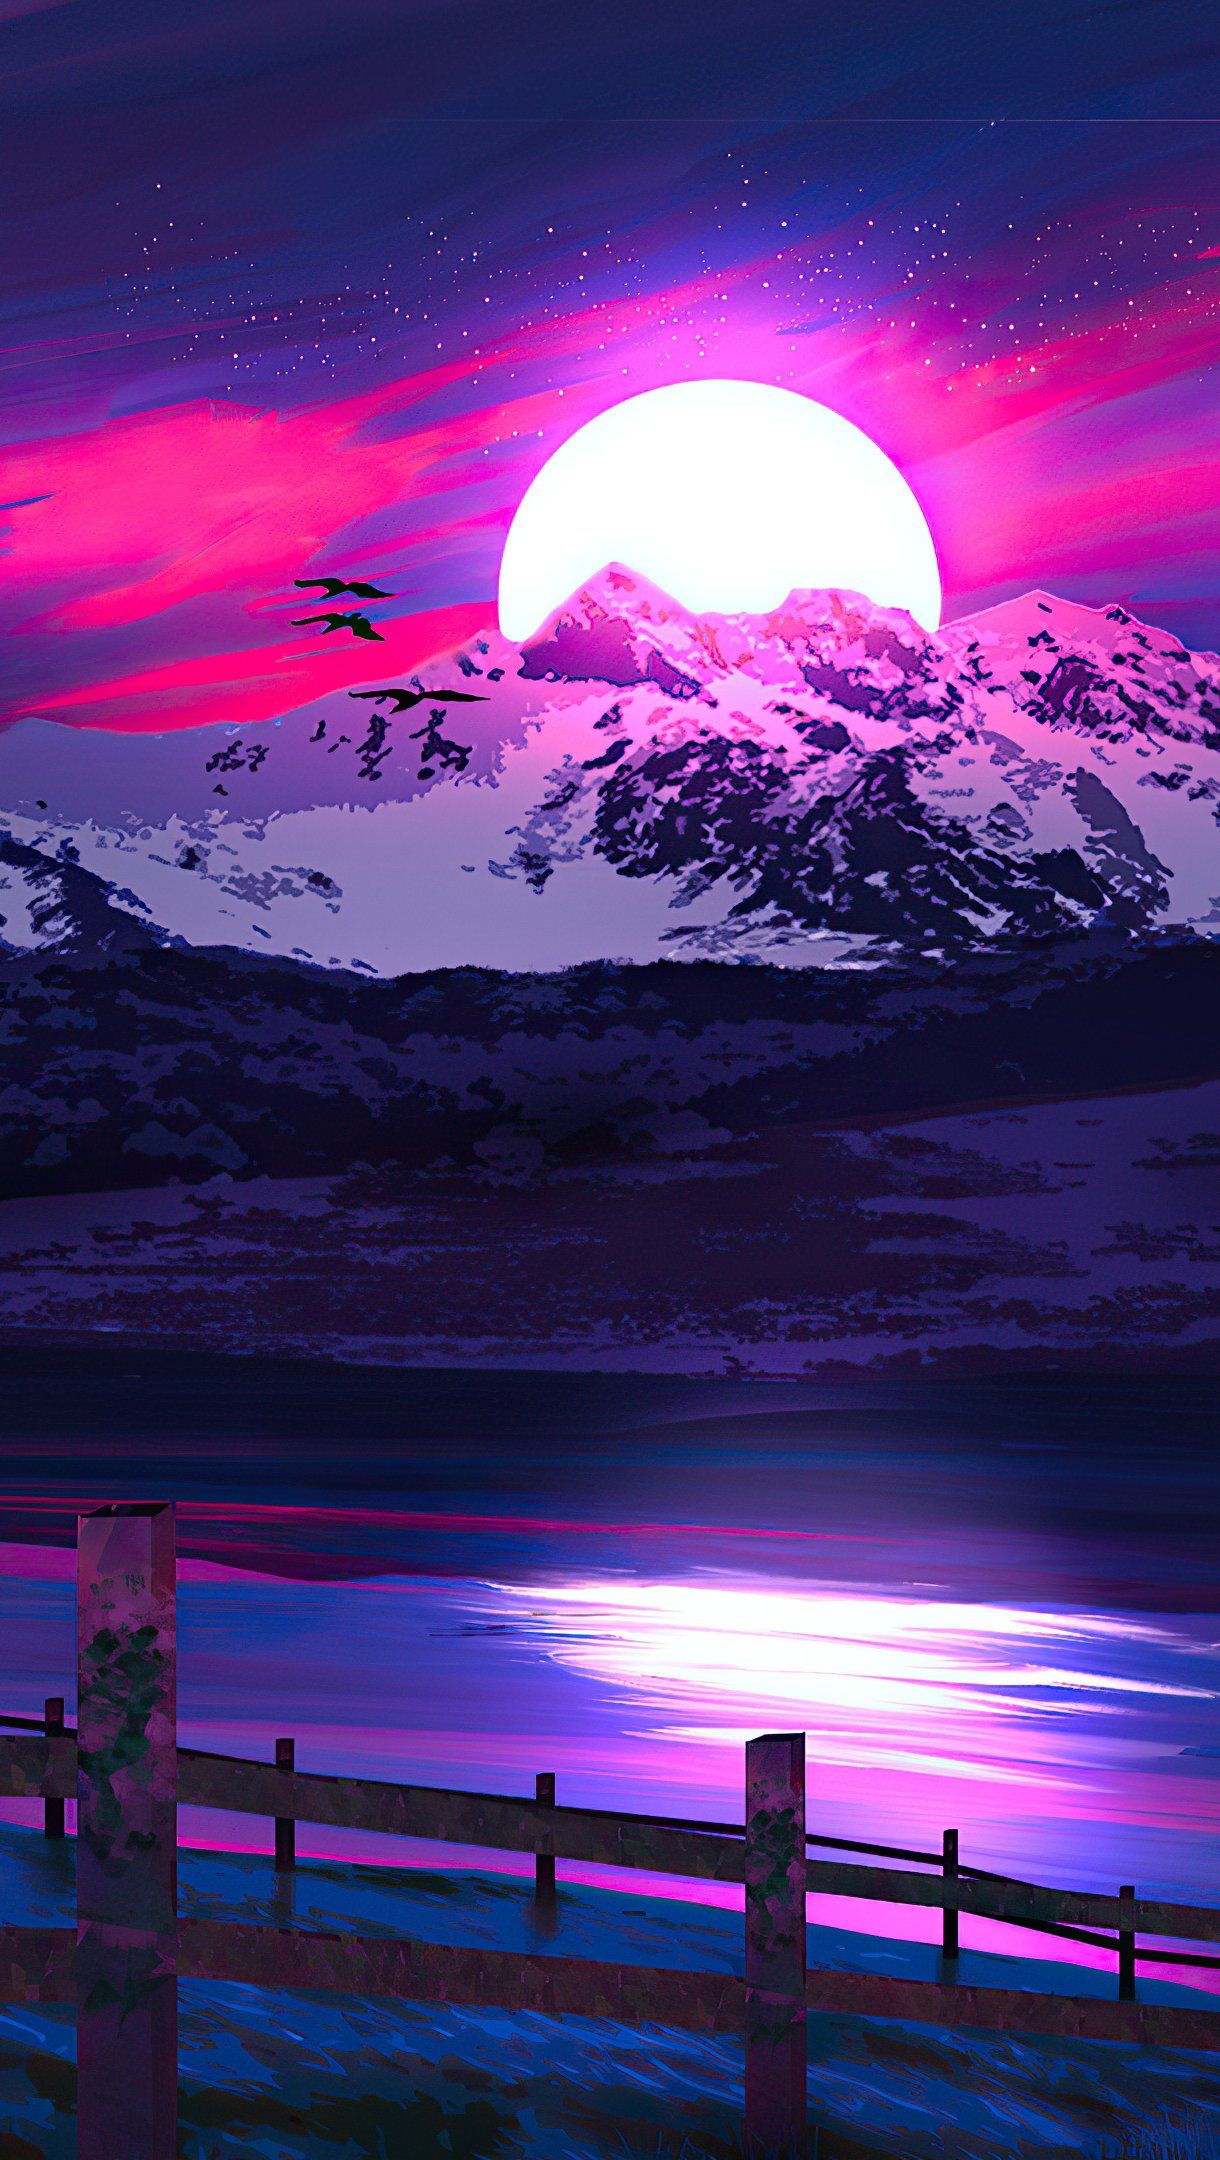 Digital Landscape at sunset Wallpaper 4k Ultra HD